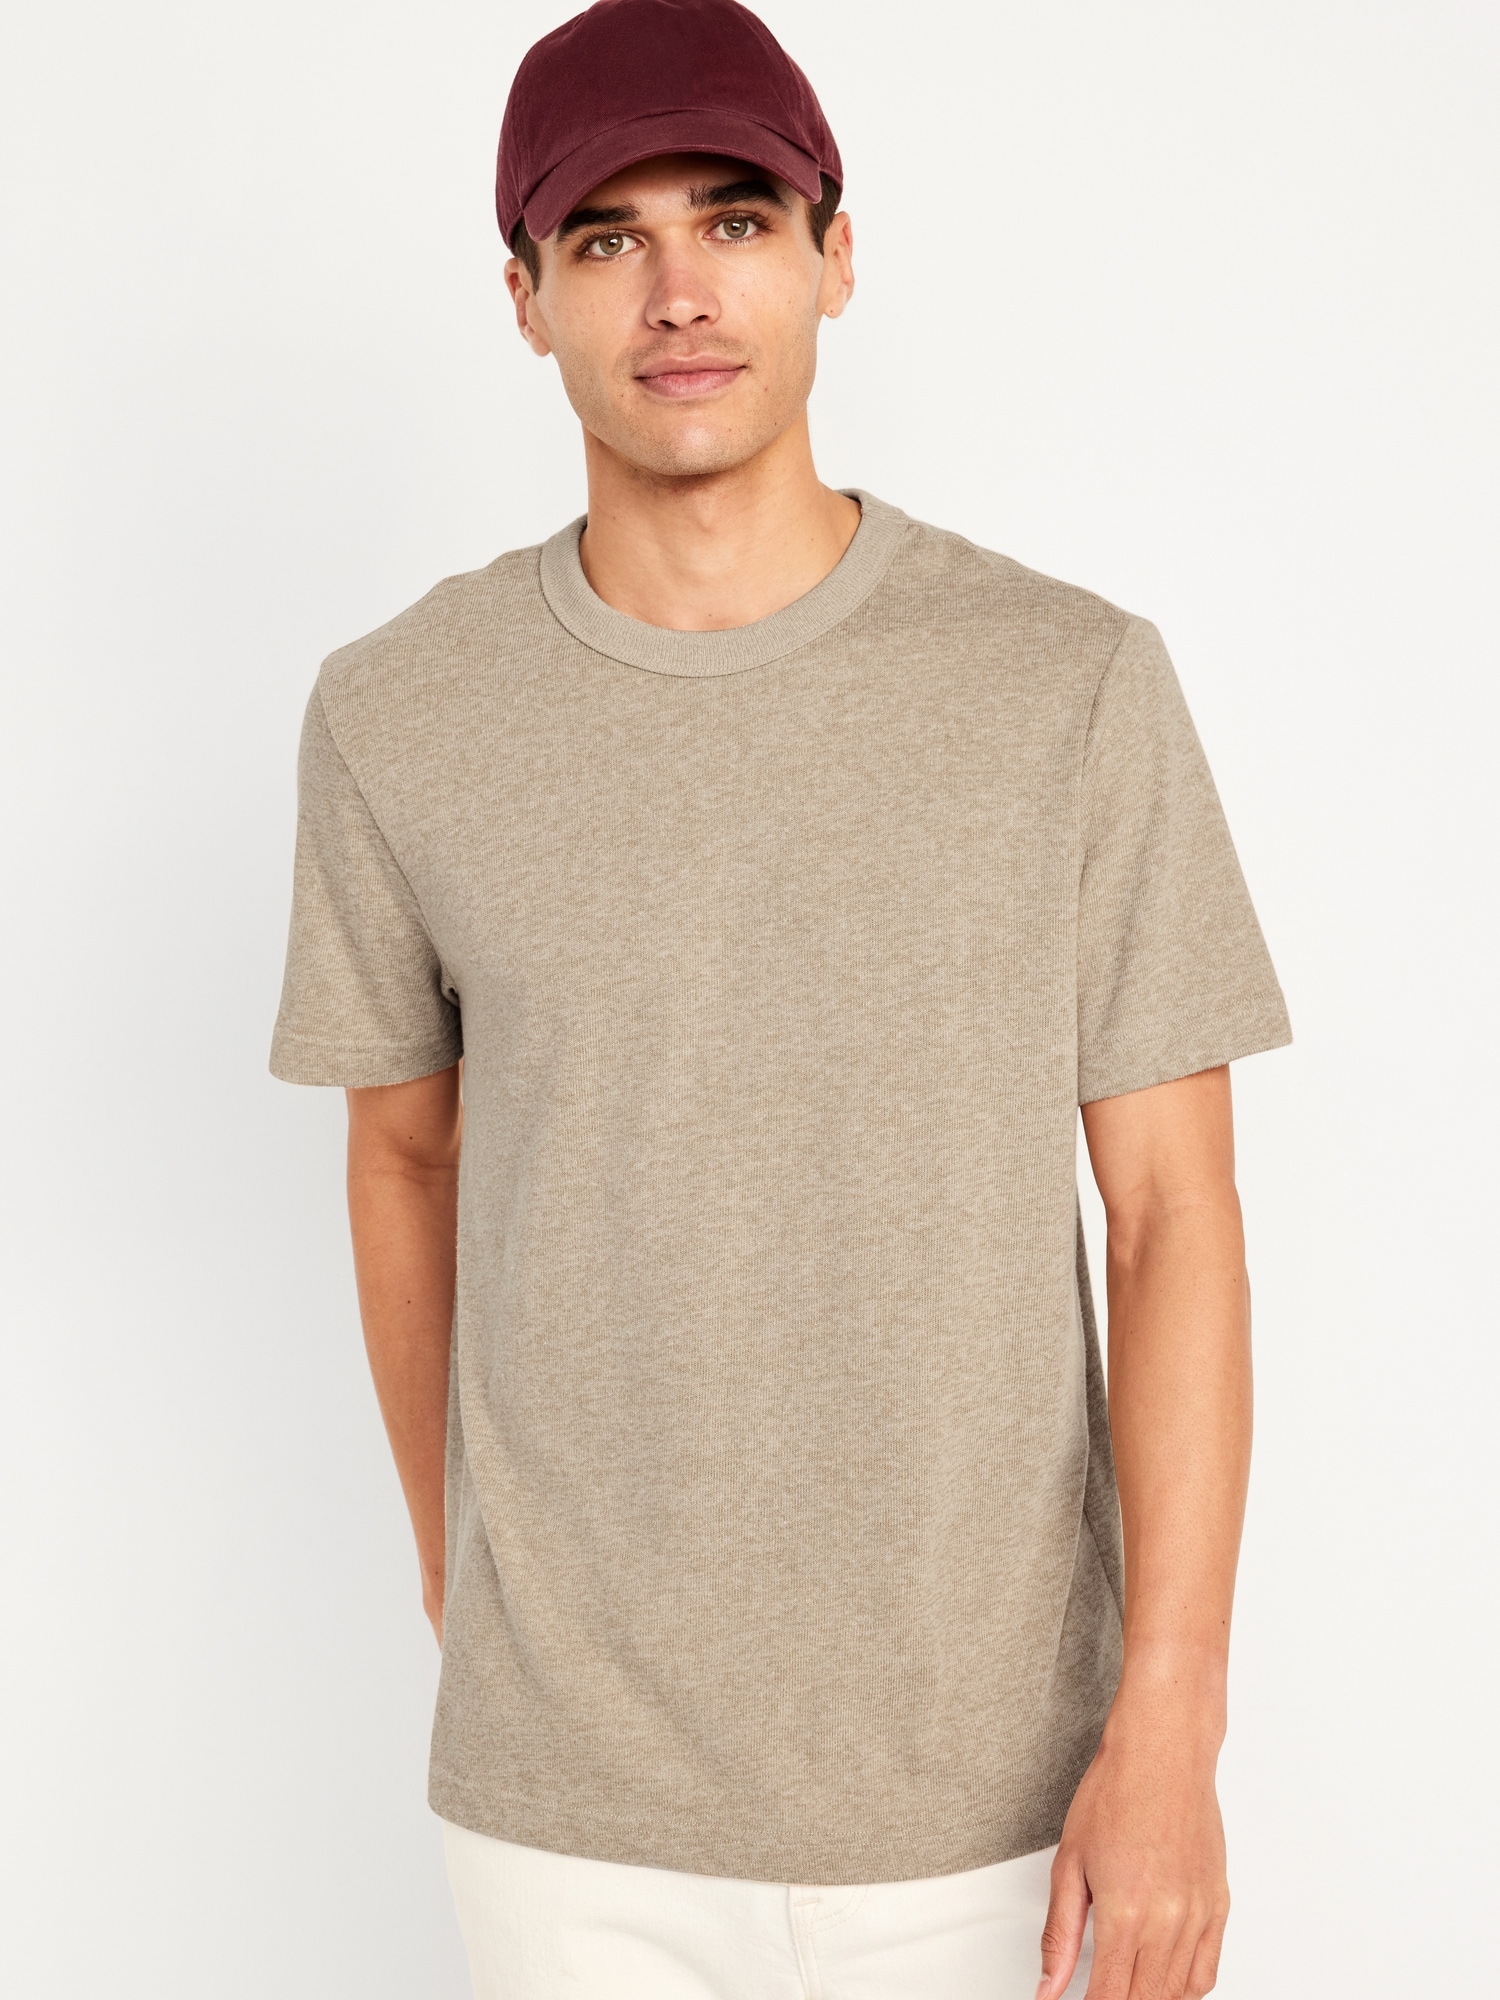 Jersey-Knit T-Shirt for Men